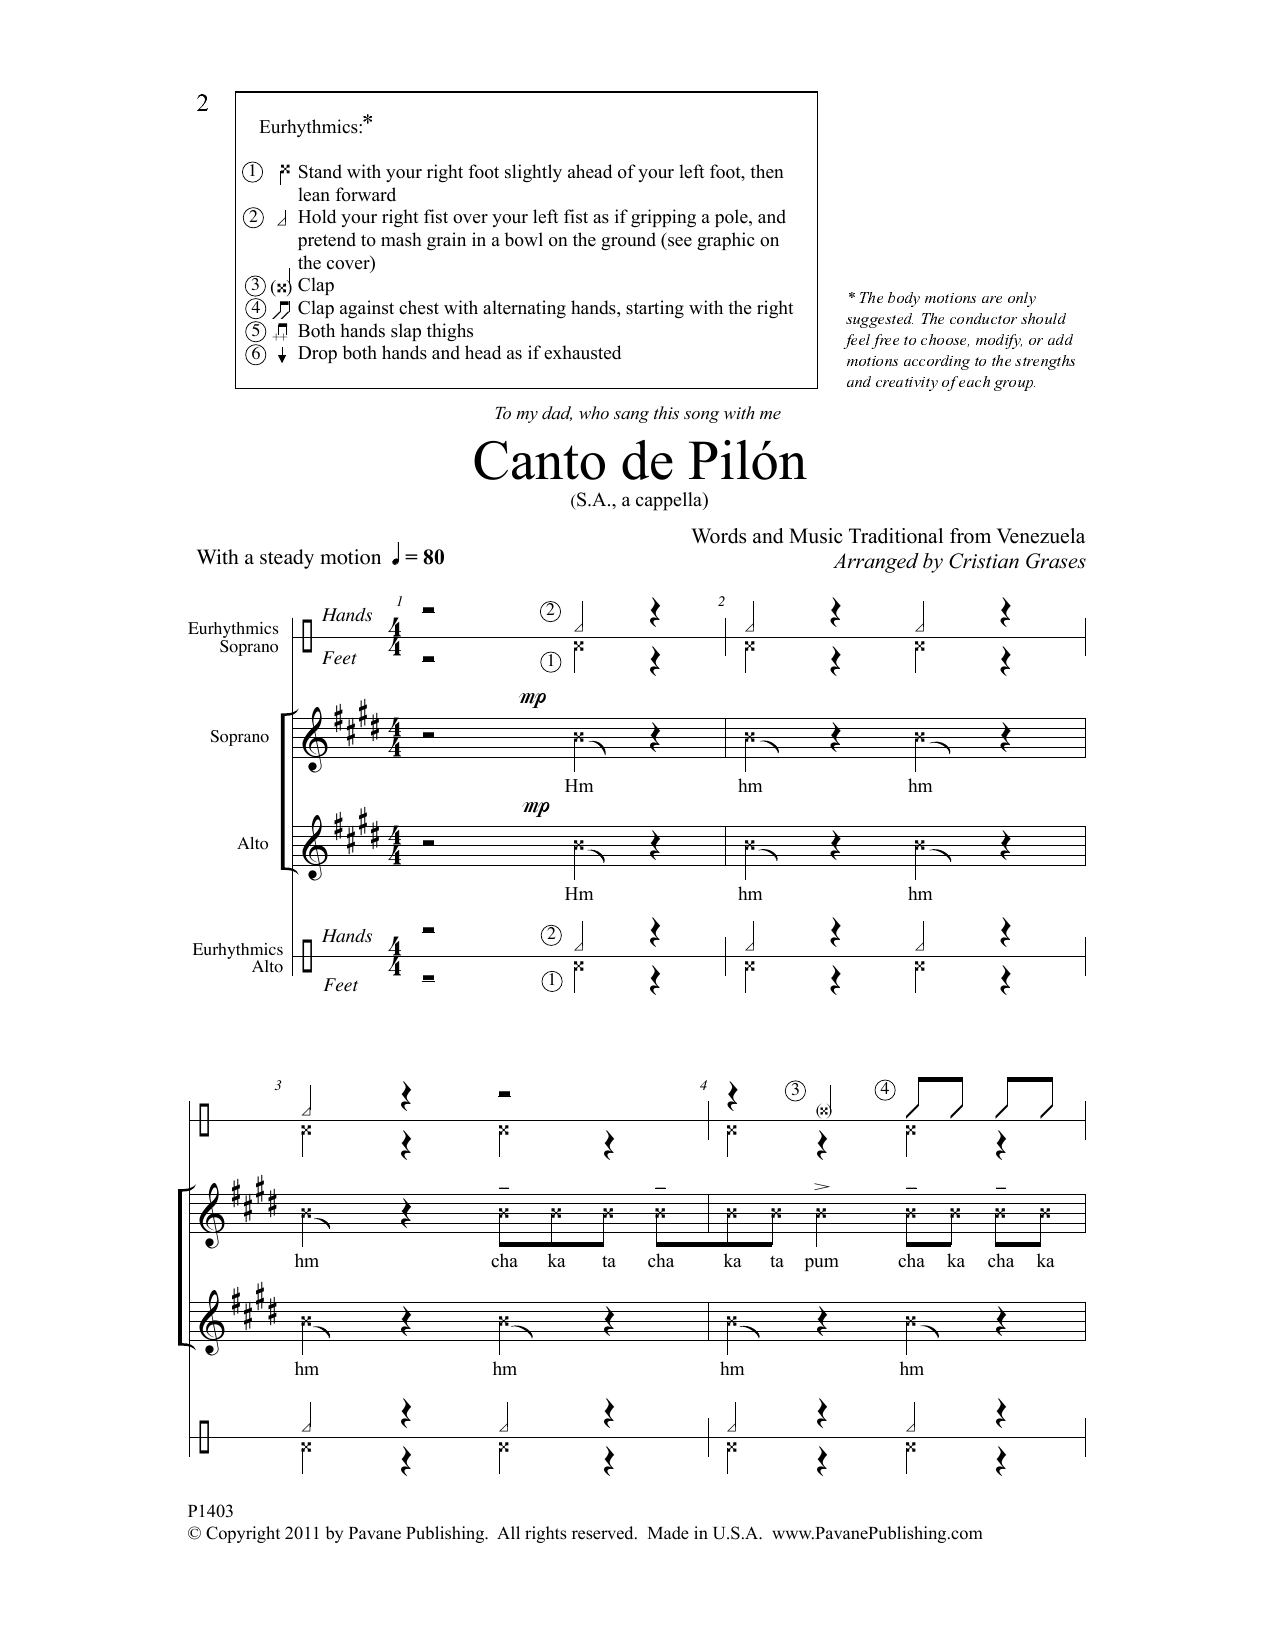 Cristian Grases Canto de Pilon sheet music notes and chords arranged for SAB Choir